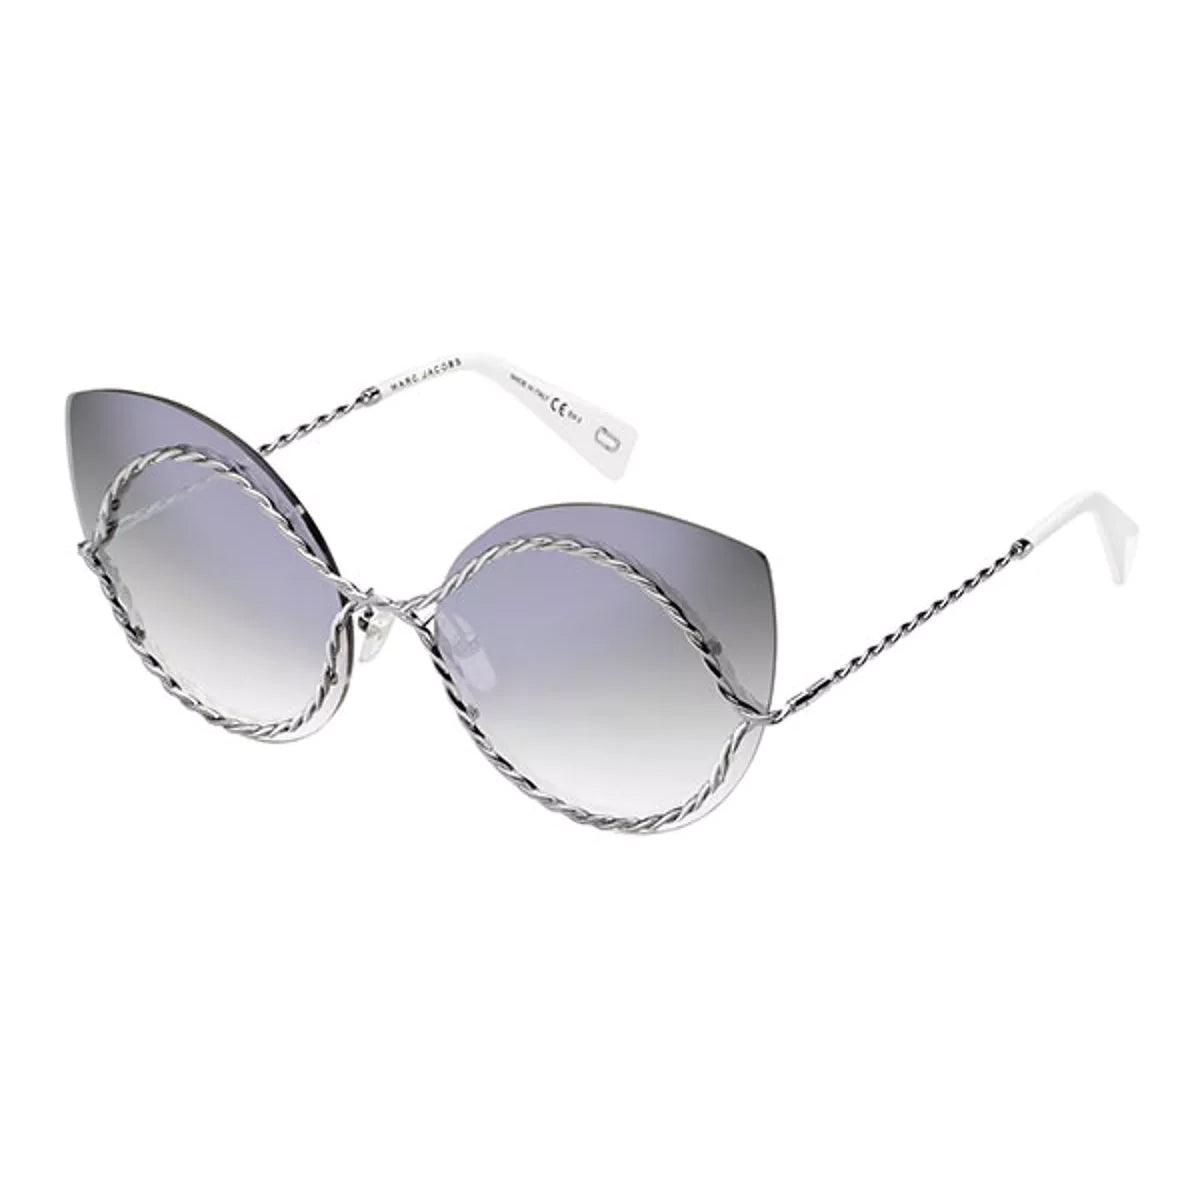 Marc Jacobs Women's Cat Eye Sunglasses Rimless Gradient Grey MARC 161/S 6LB